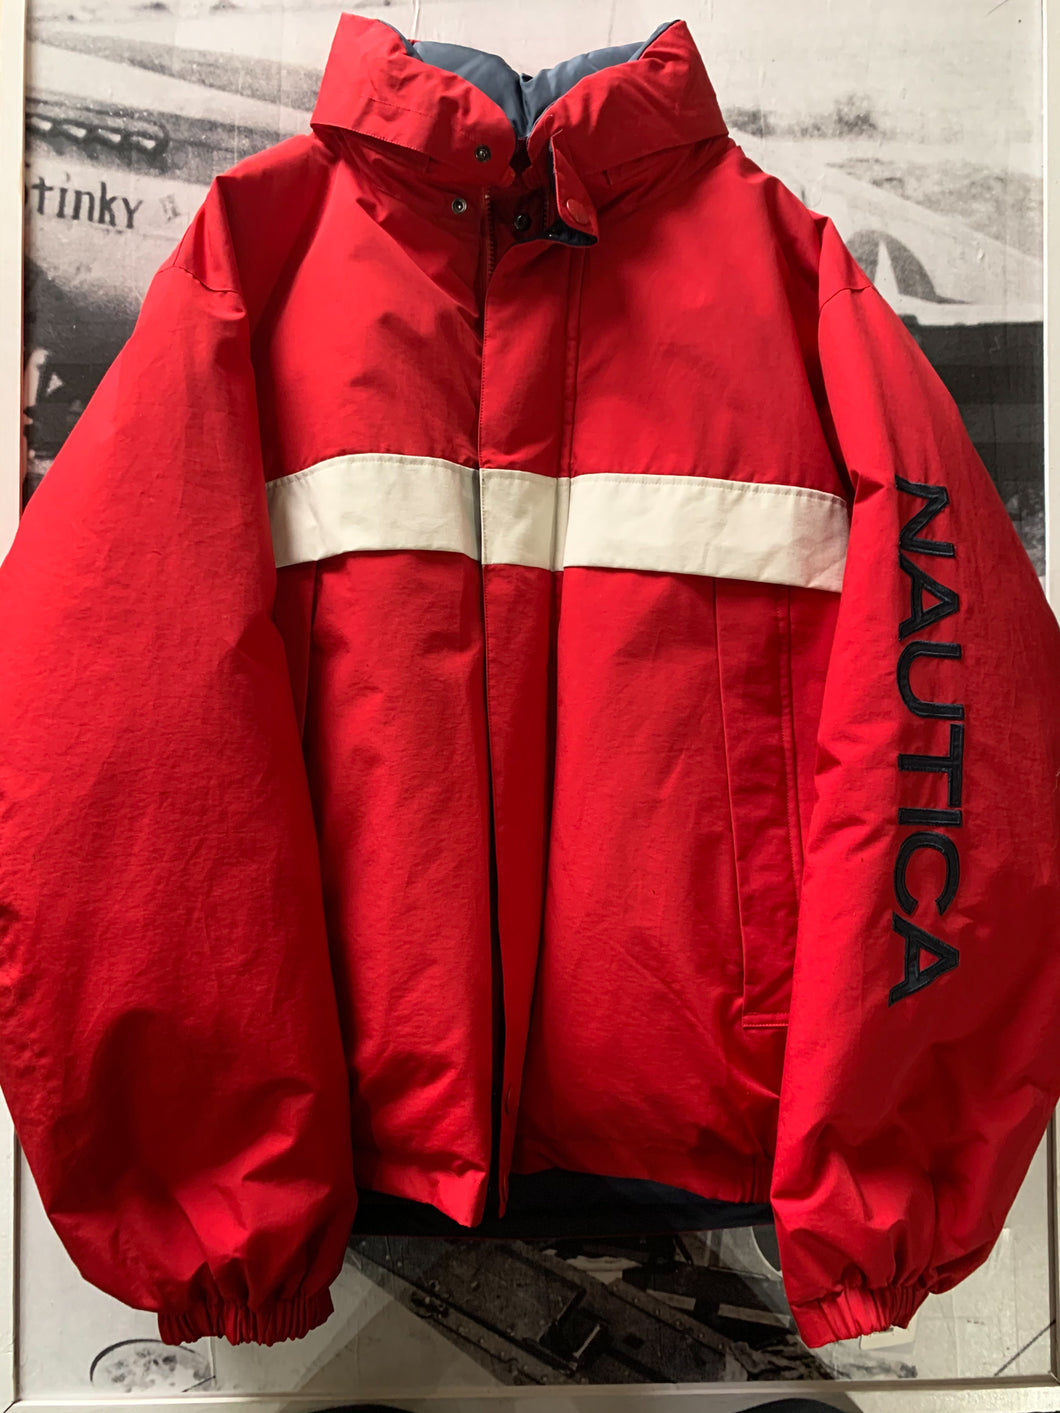 Nautica Men's Reversible Quilted Puffer Jacket - Macy's